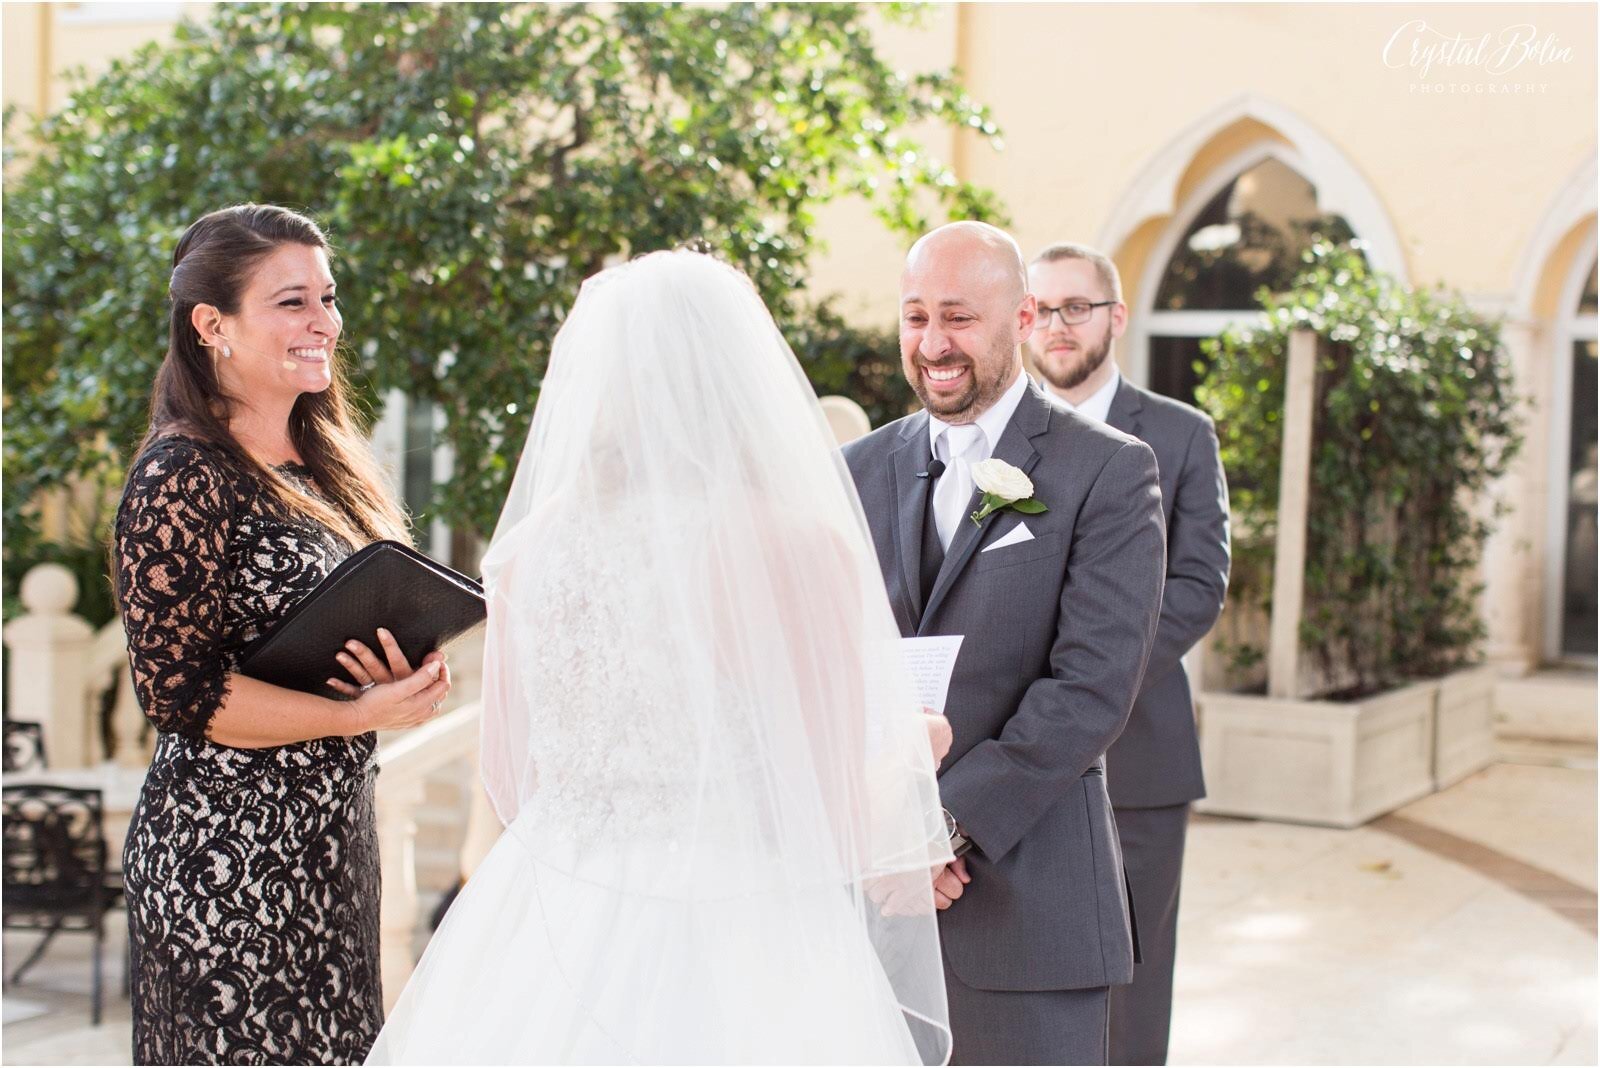 Alana & Dave's Wedding | The Addison in Boca Raton, Florida 